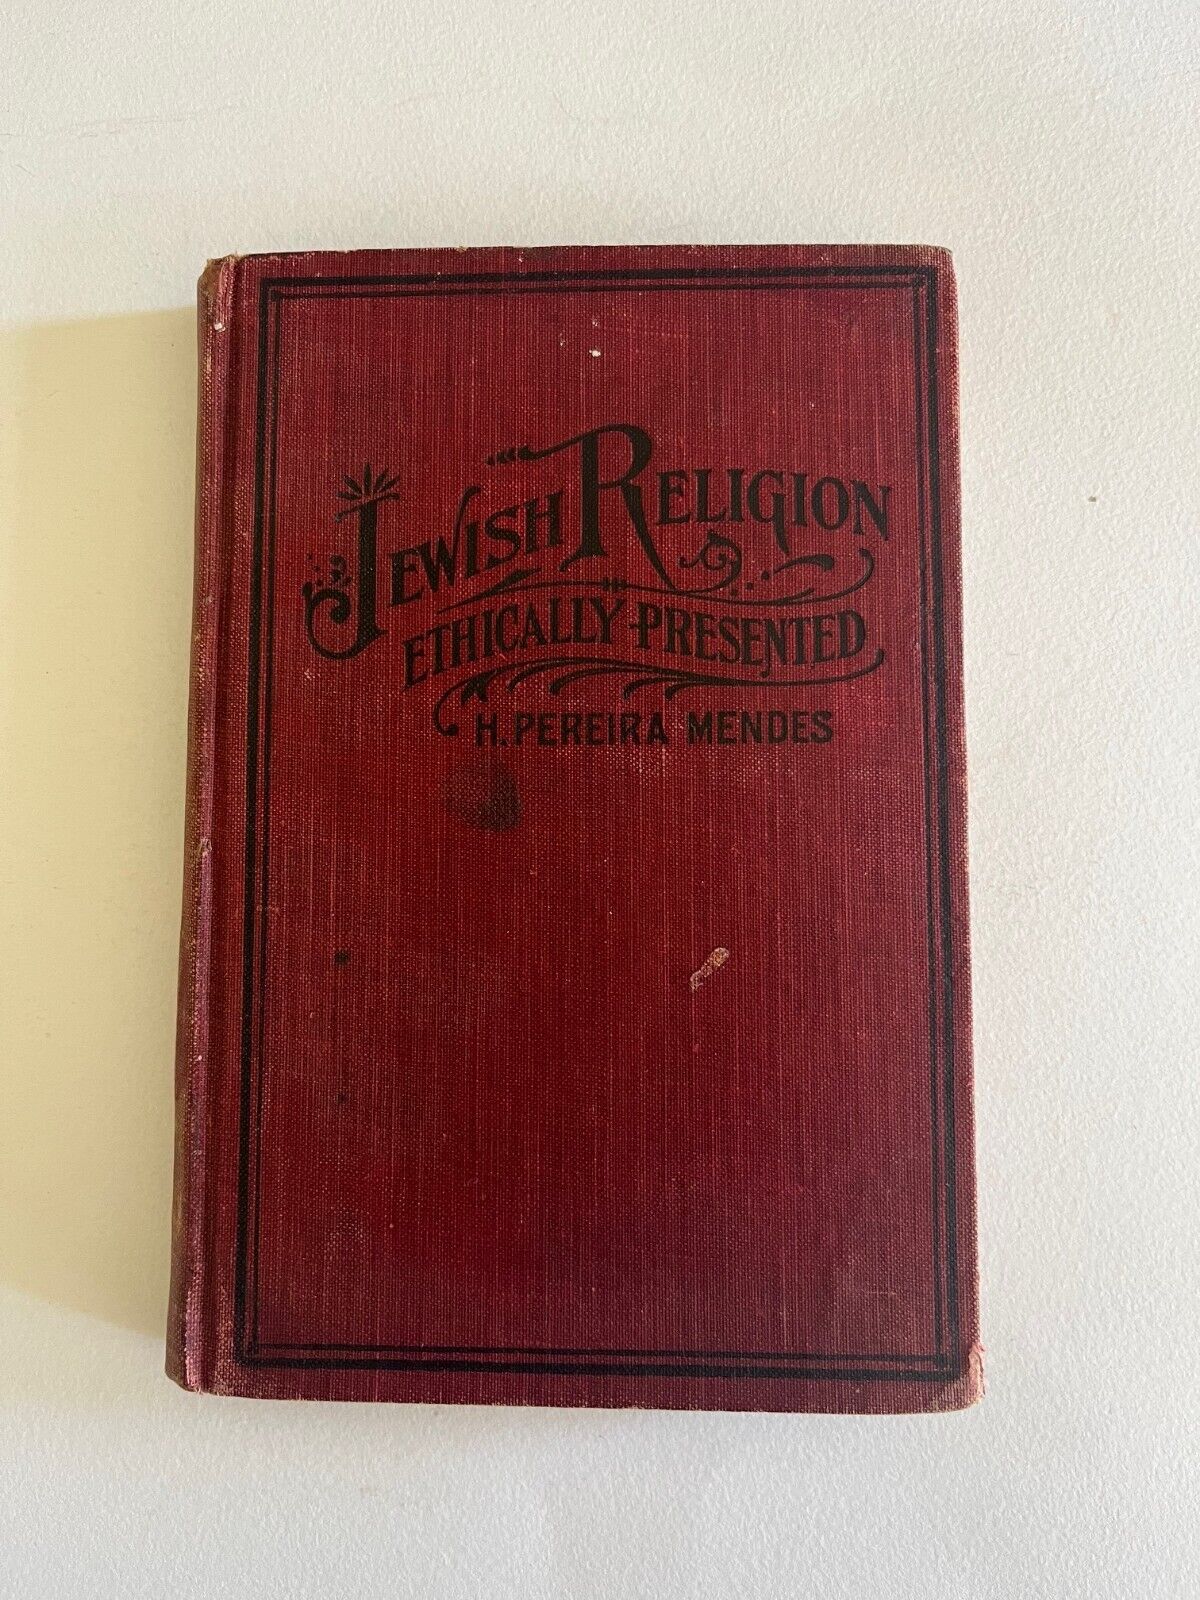 JEWISH RELIGION ETHICALLY PRESENTED ~ H. Pereira Mendes ~ 1904 rare book antique